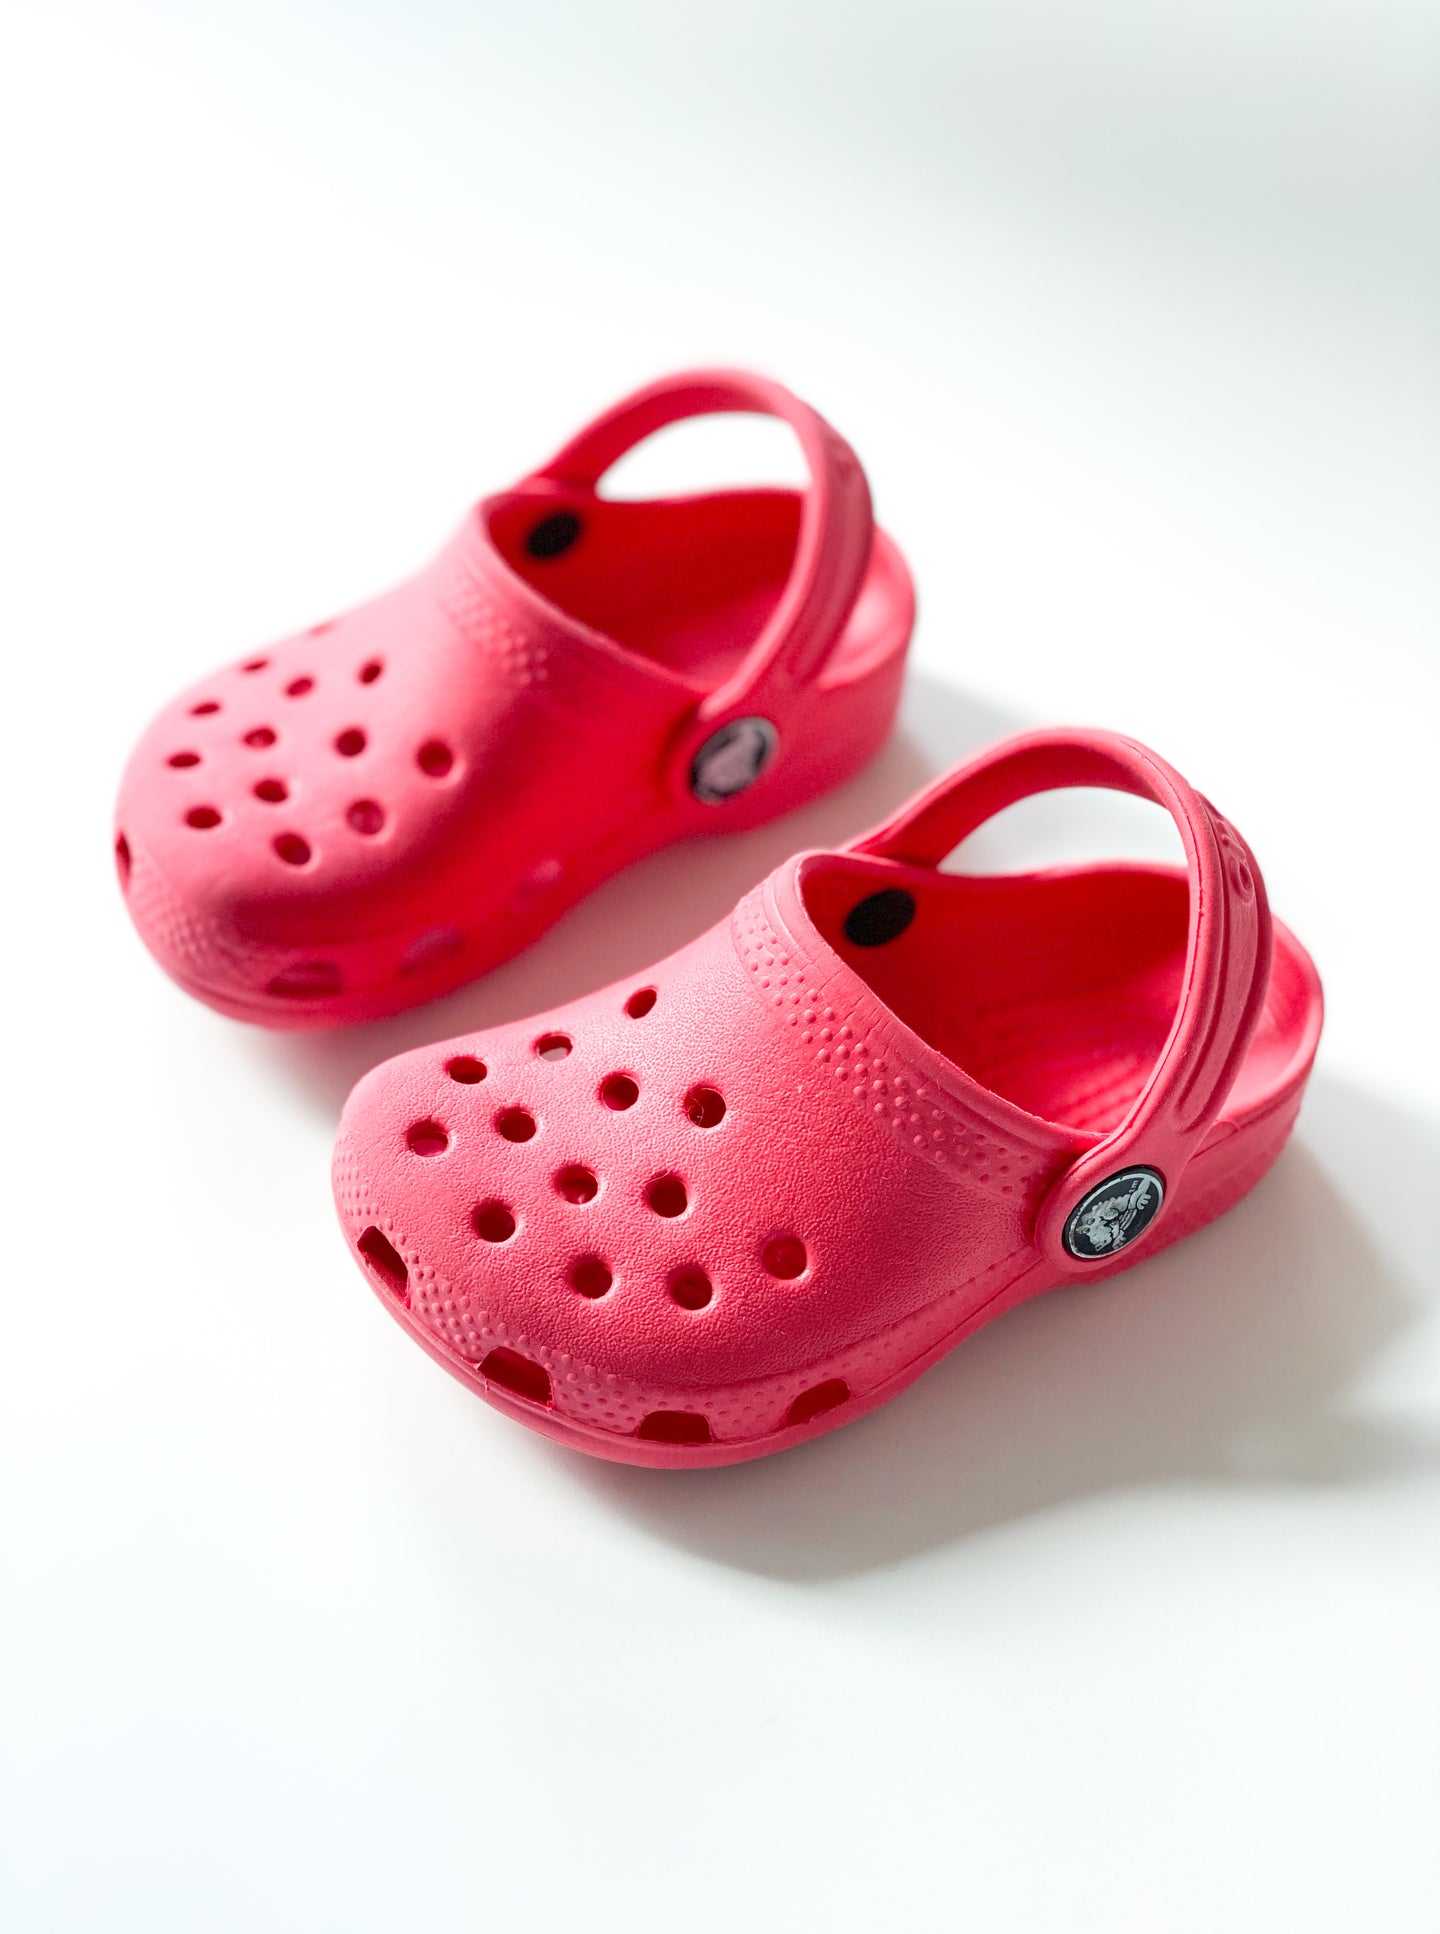 [US4] Crocs Sandals in Pink or Blue